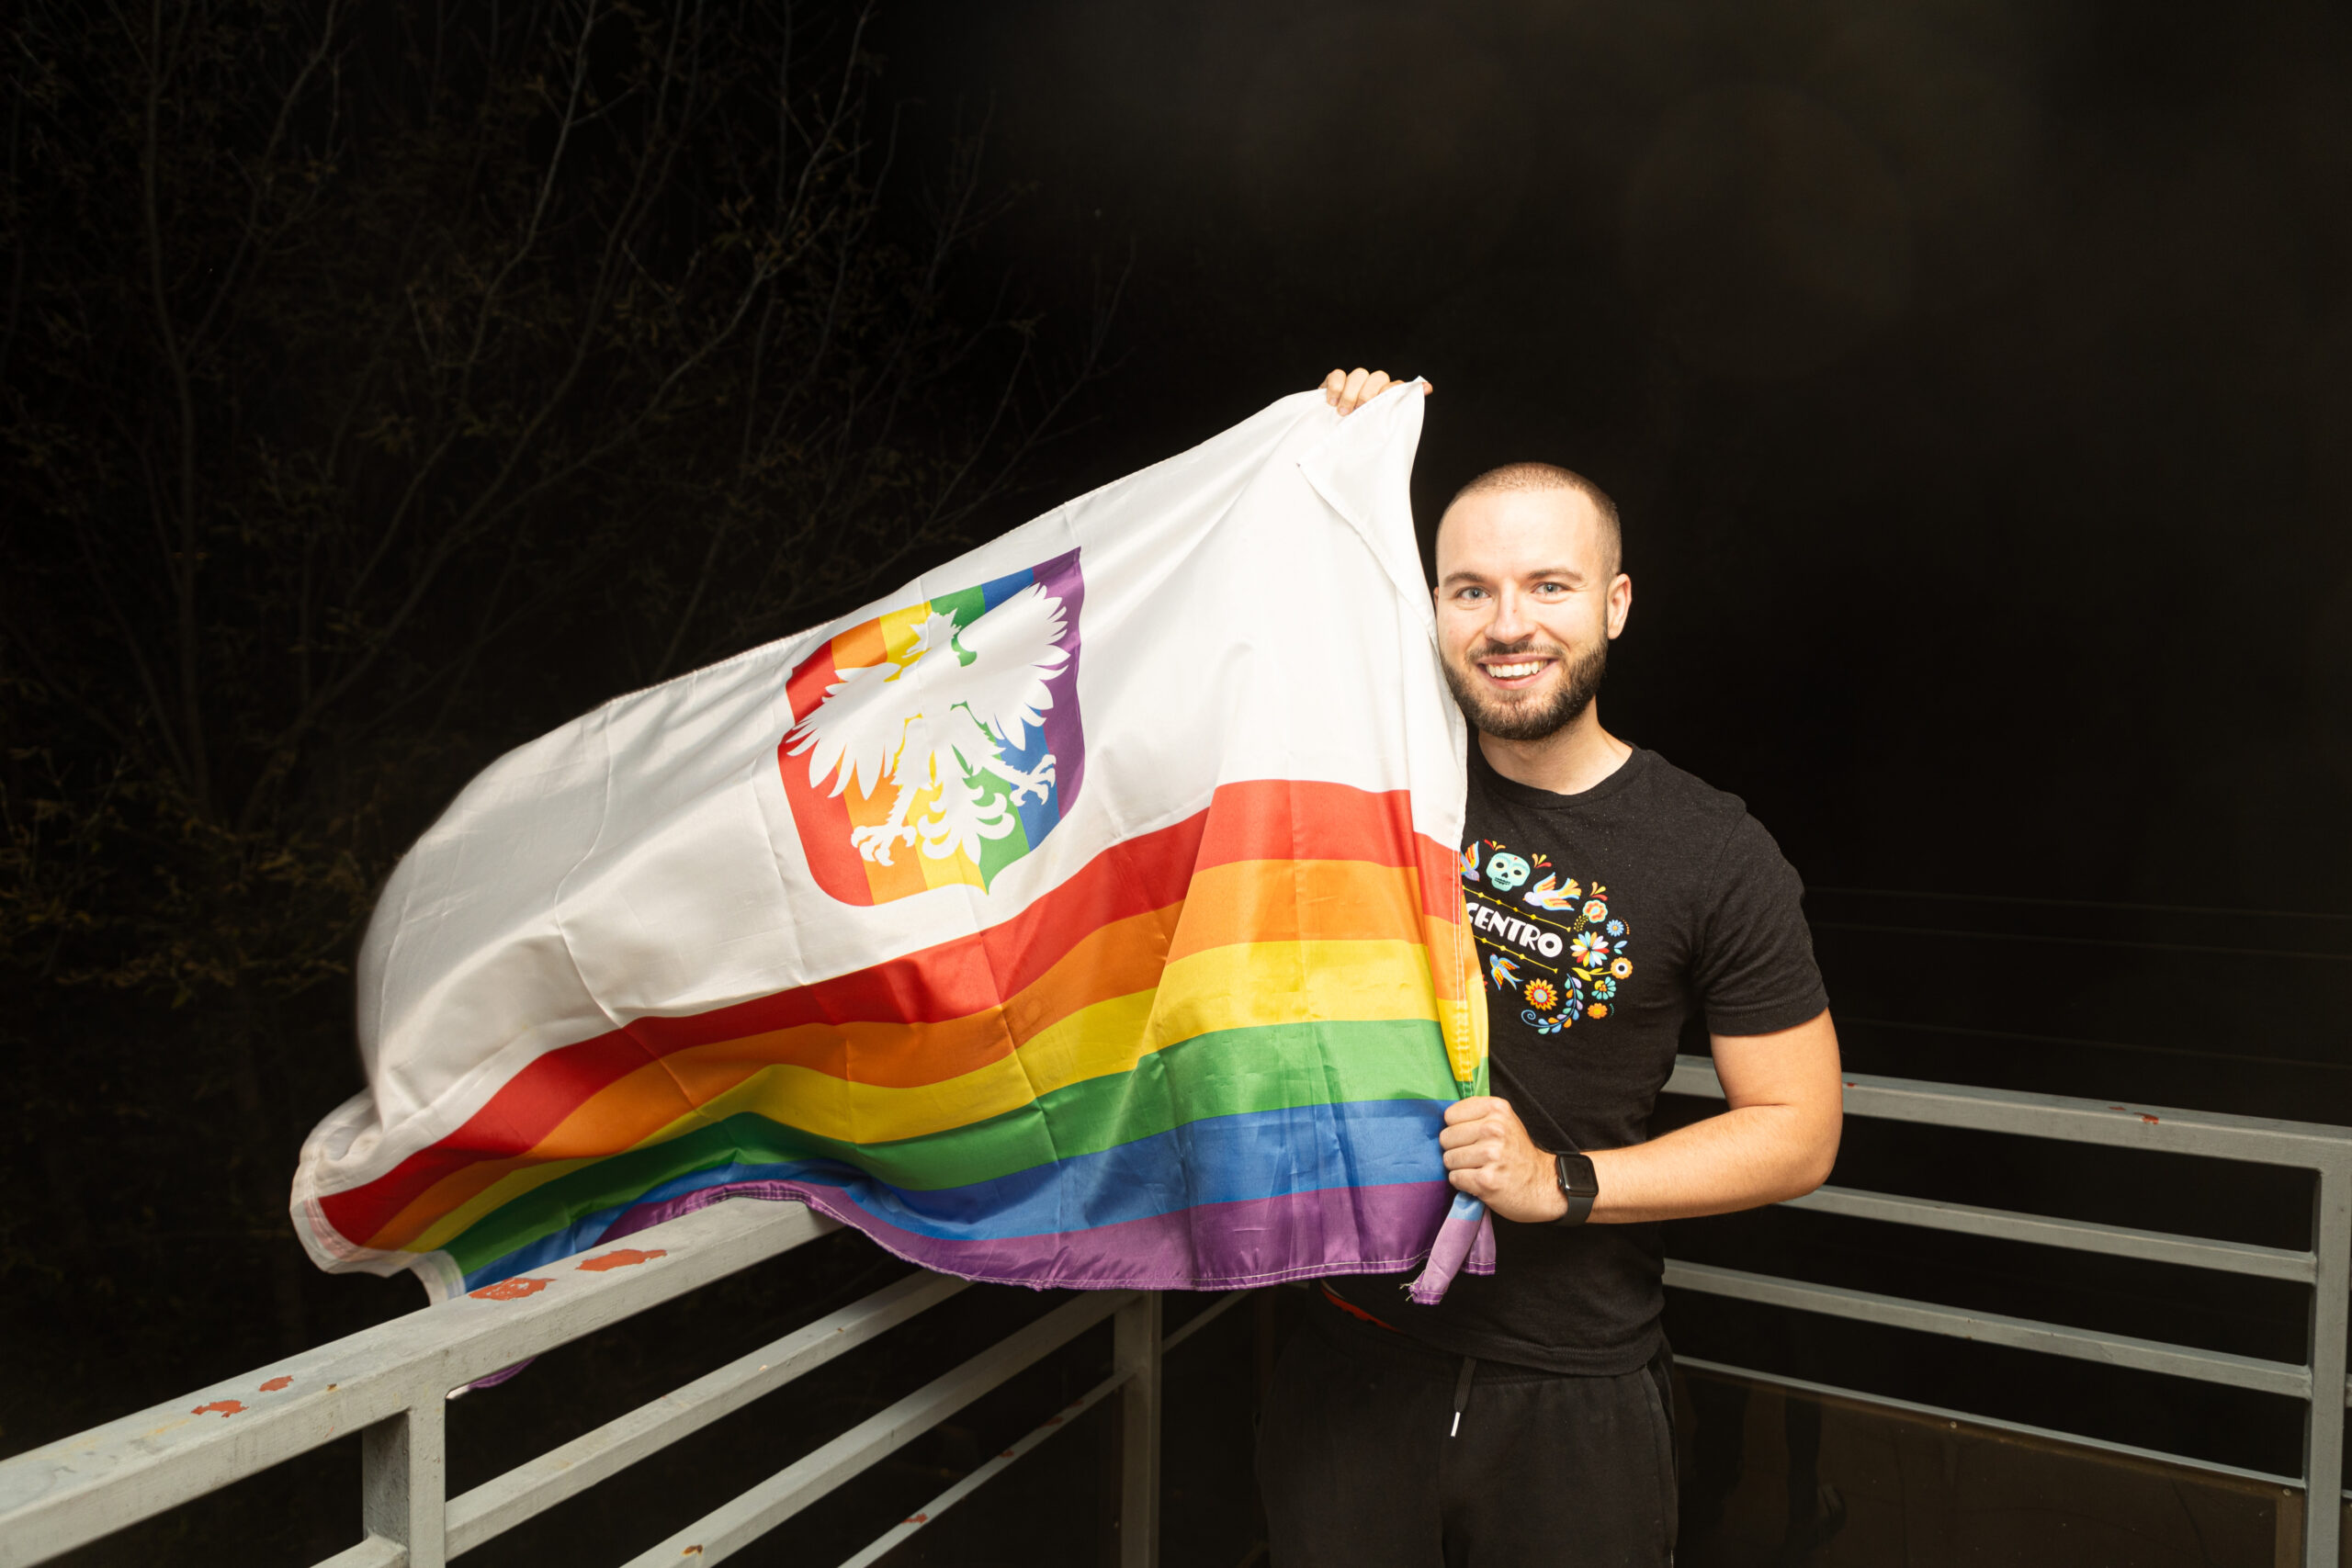 Polish LGBT+ activist Bart Staszewski holds up a Polish pride flag and smiles